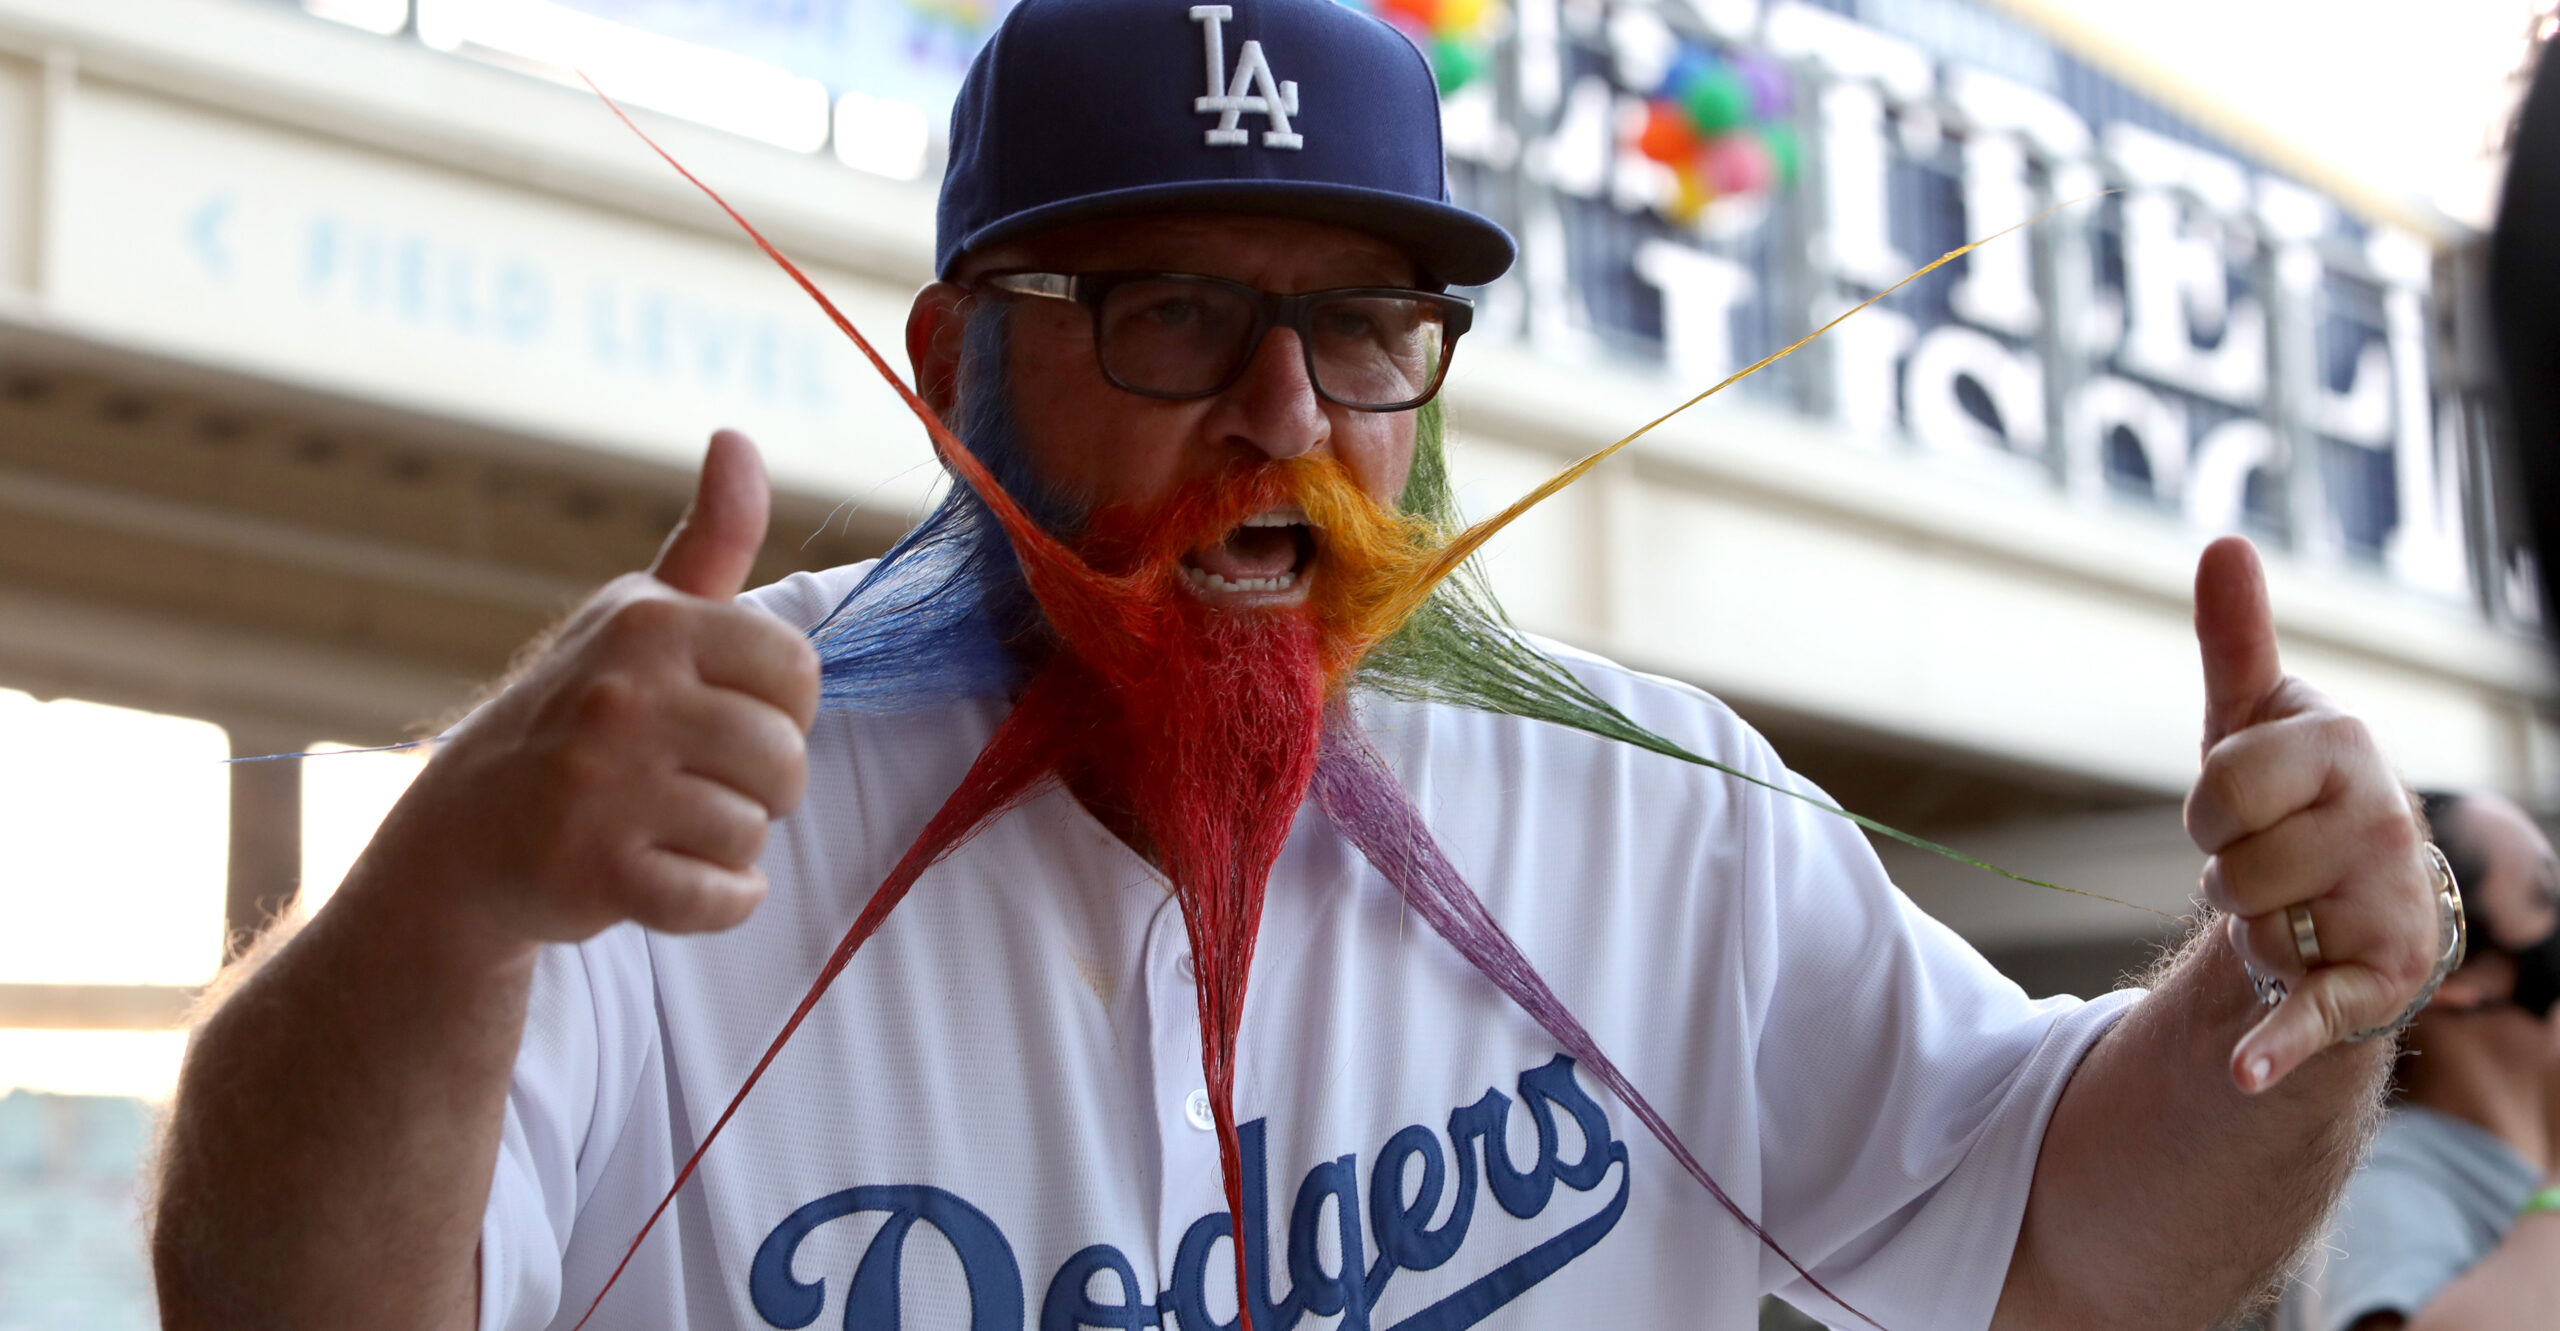 LA Fans Should Boycott Dodgers Over LGBT Group’s Anti-Catholic Bigotry